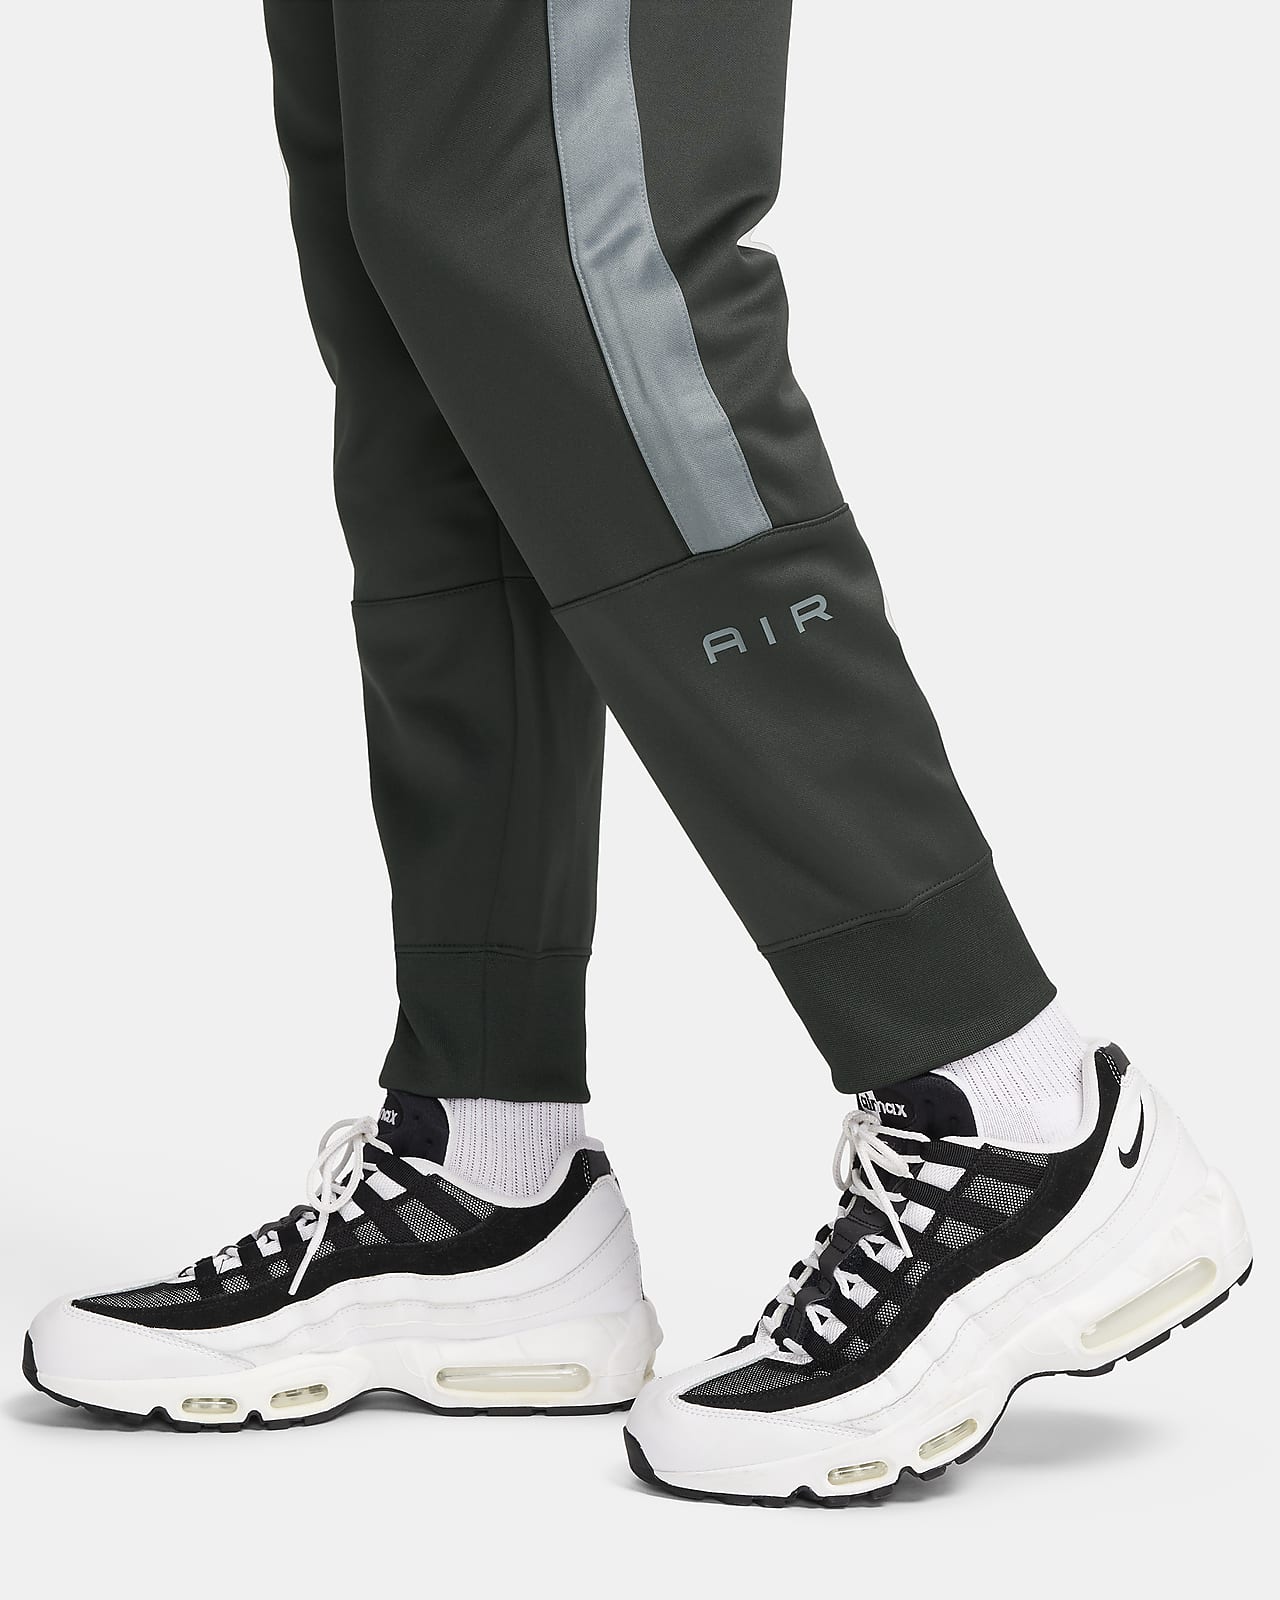 Le meilleur pantalon de running Nike. Nike LU